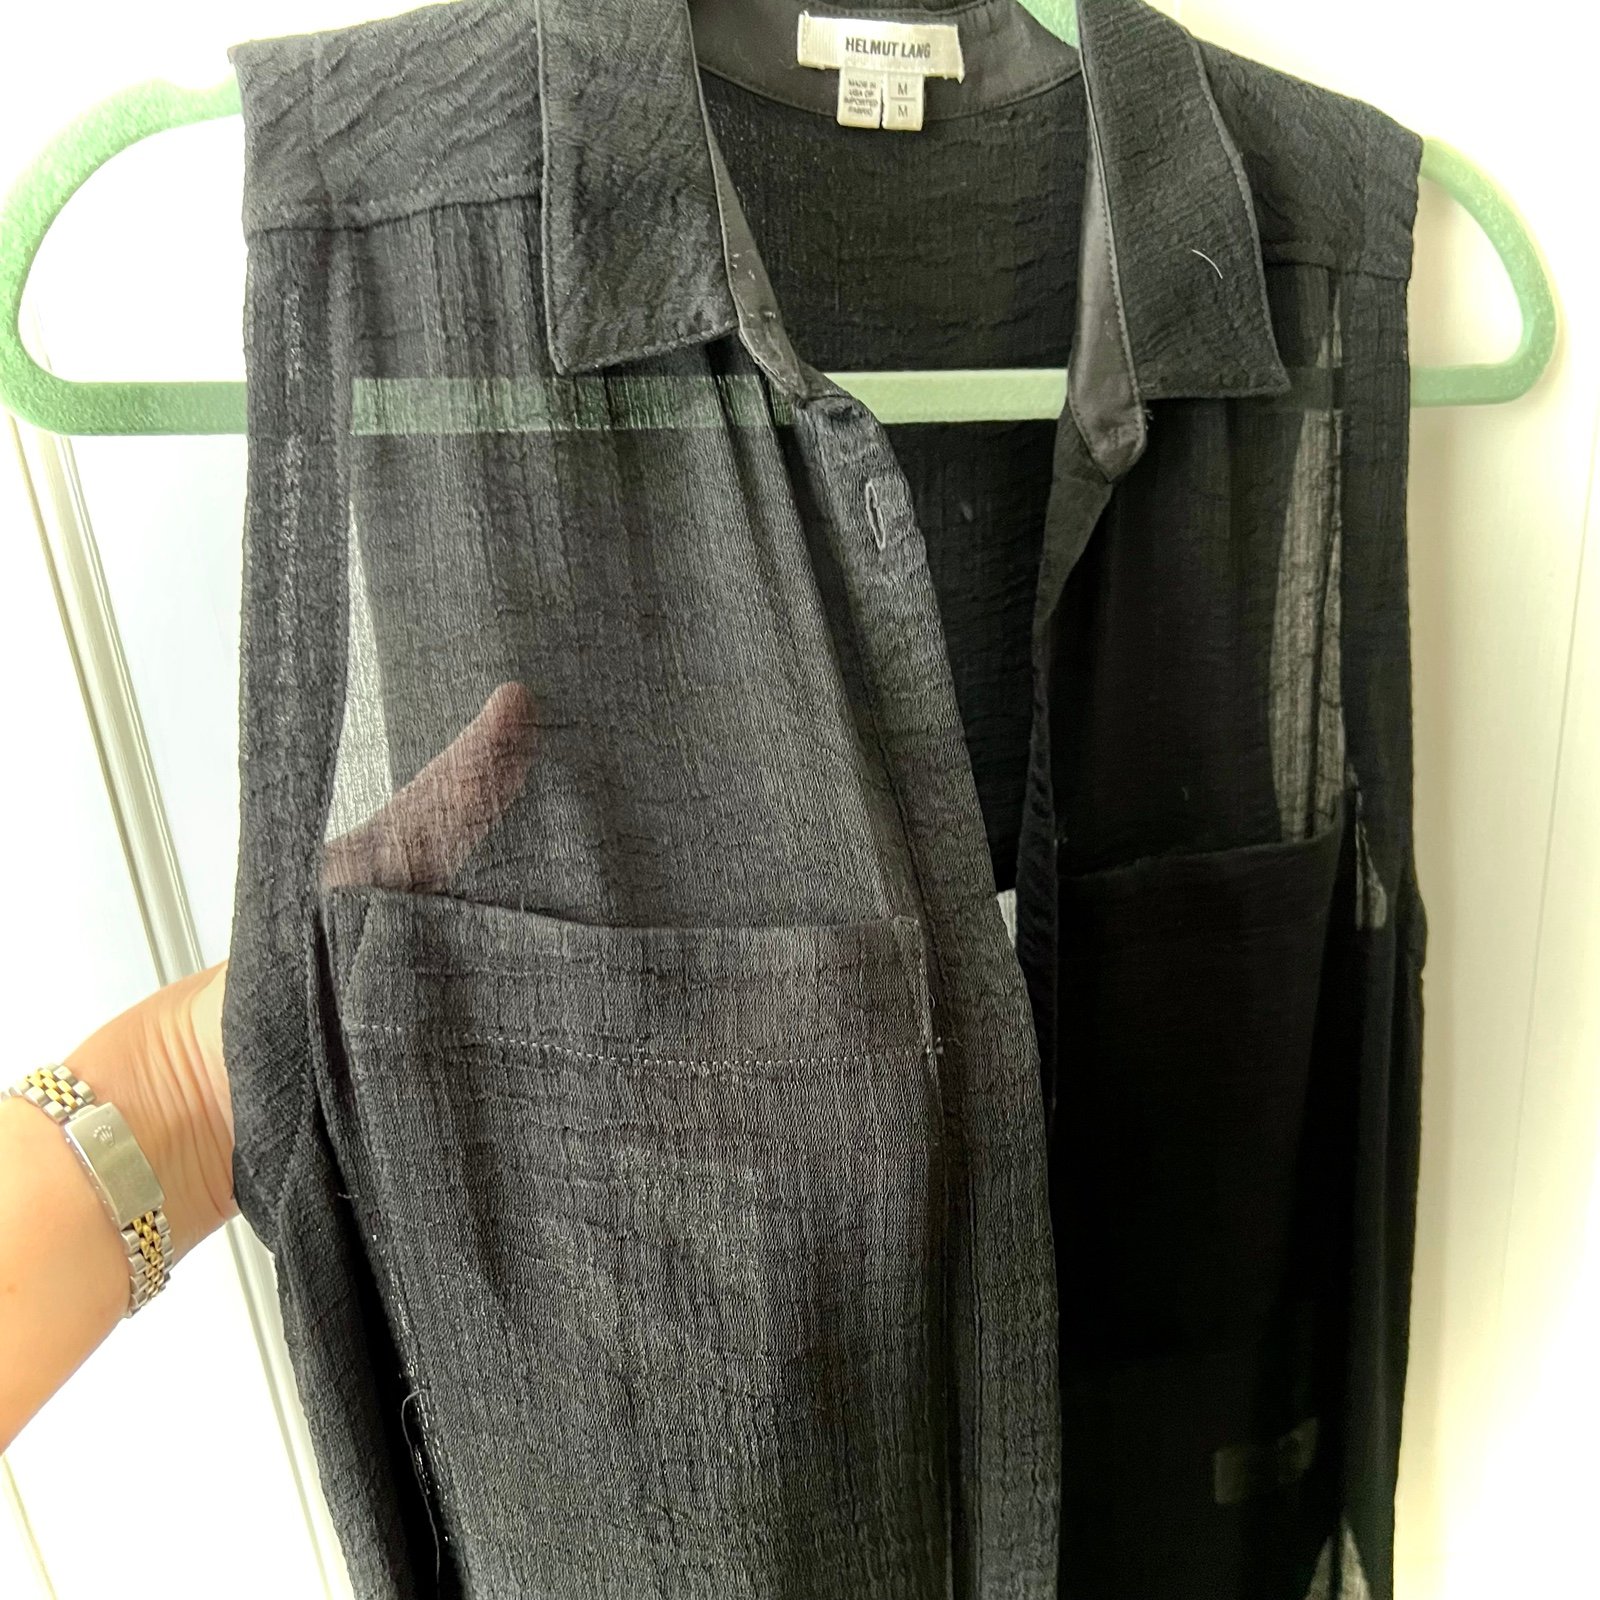 Popular Helmut Lang Black Semi-Sheer Coverup Dress MhoLWvOkQ Discount